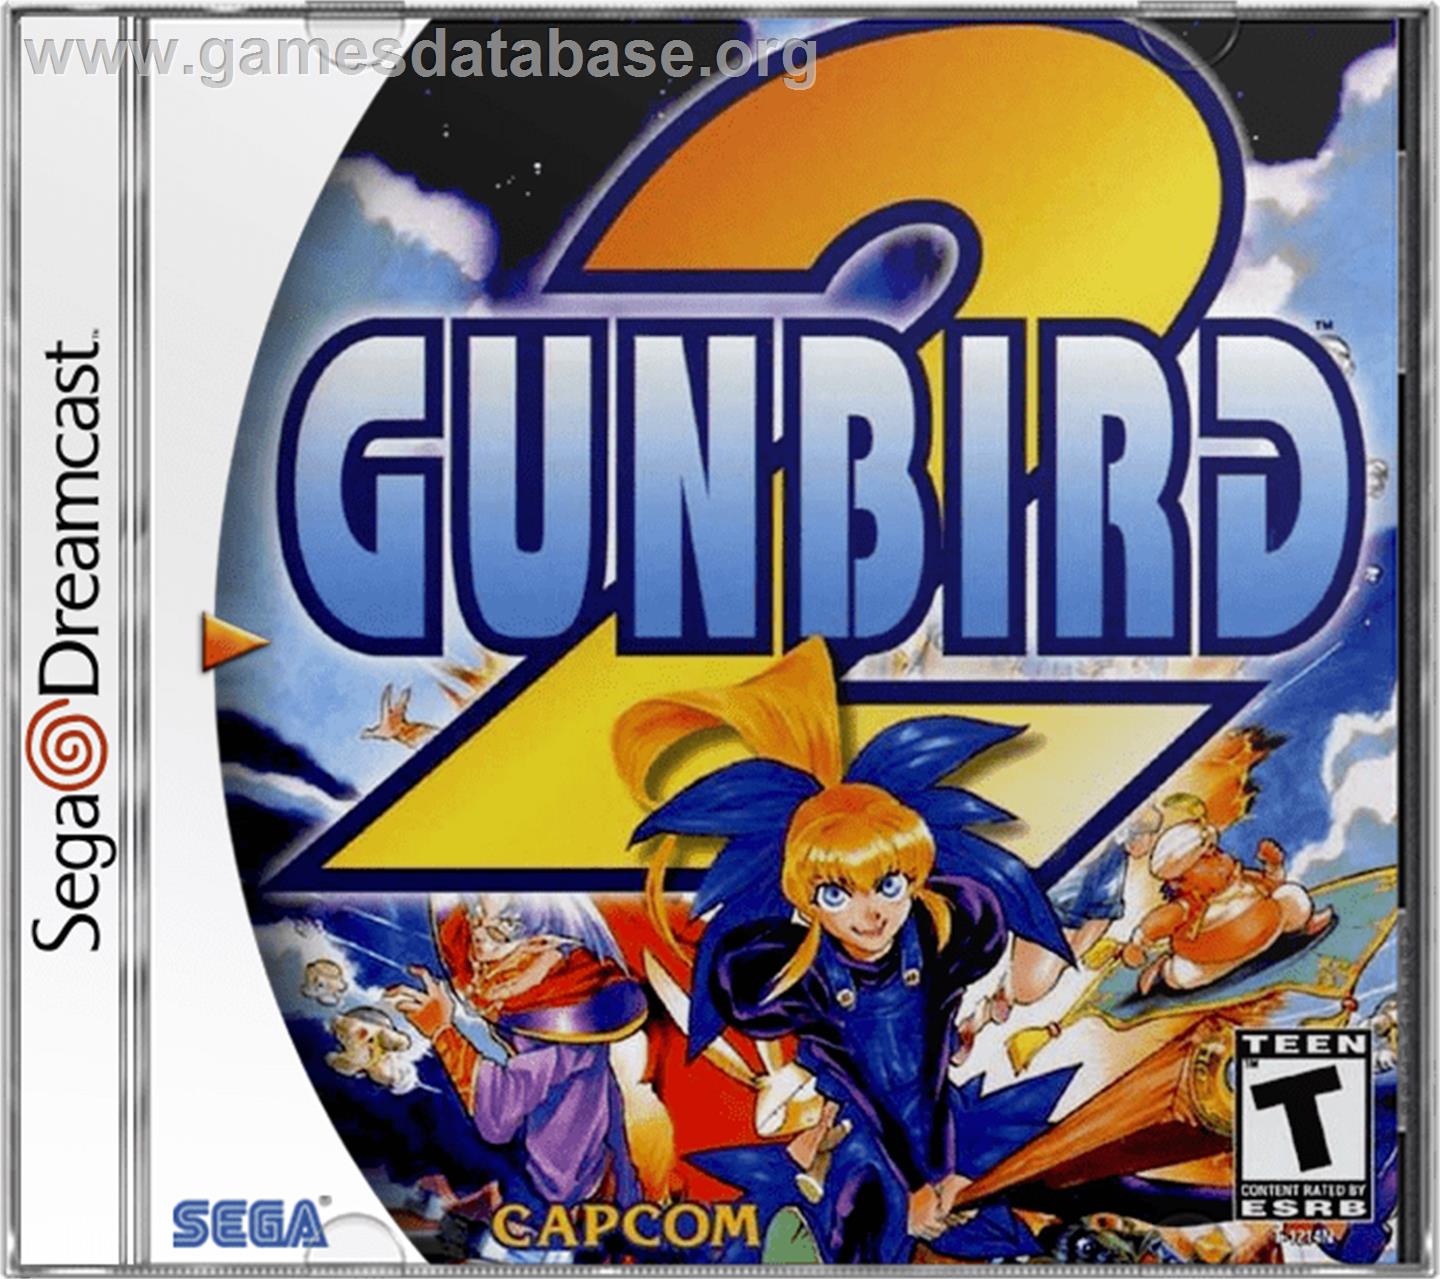 Gunbird 2 - Sega Dreamcast - Artwork - Box